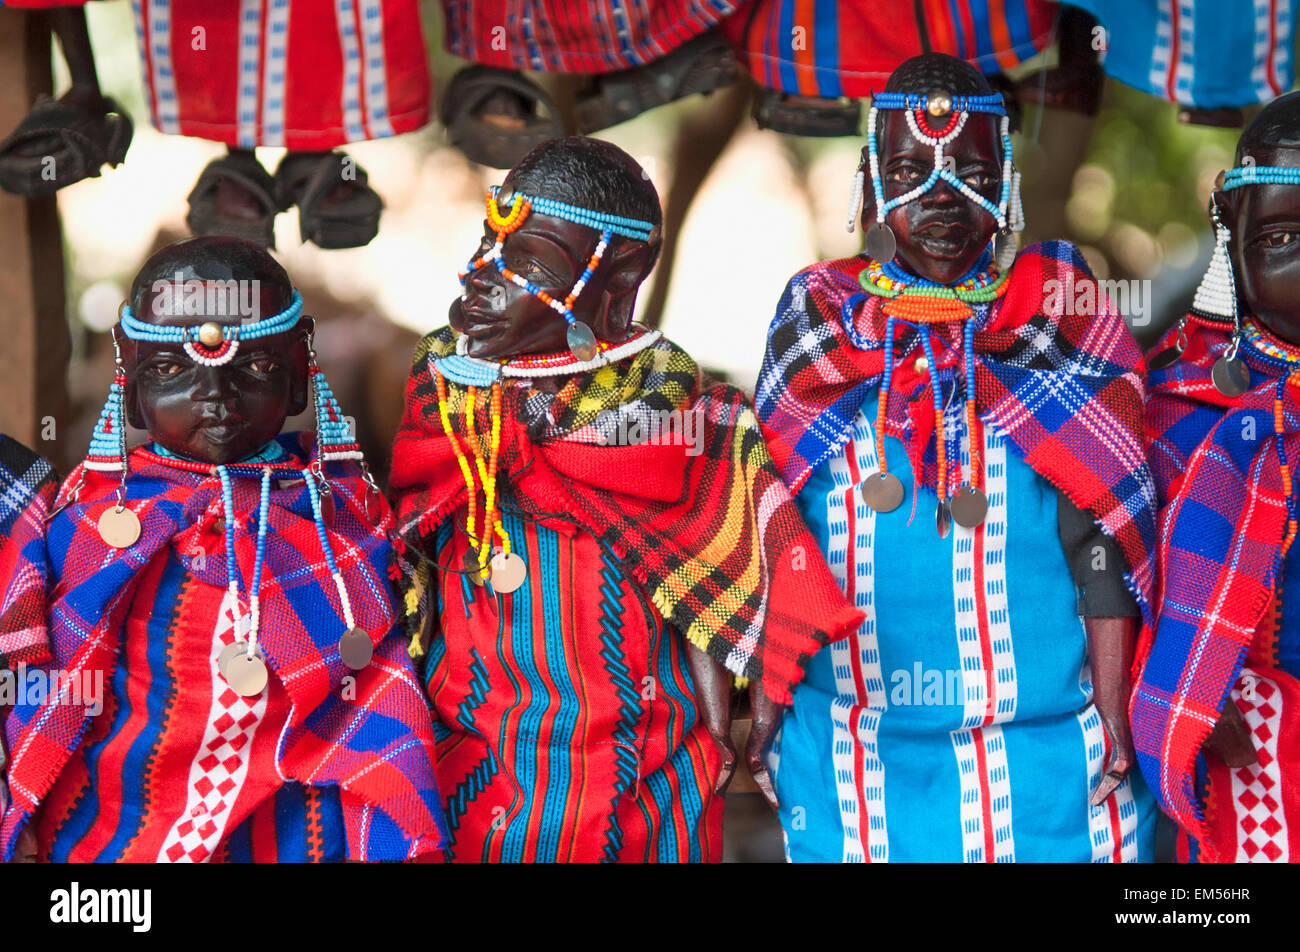 Kenya, Nairobi, Tribesman dolls dressed in colorful clothing Stock Photo